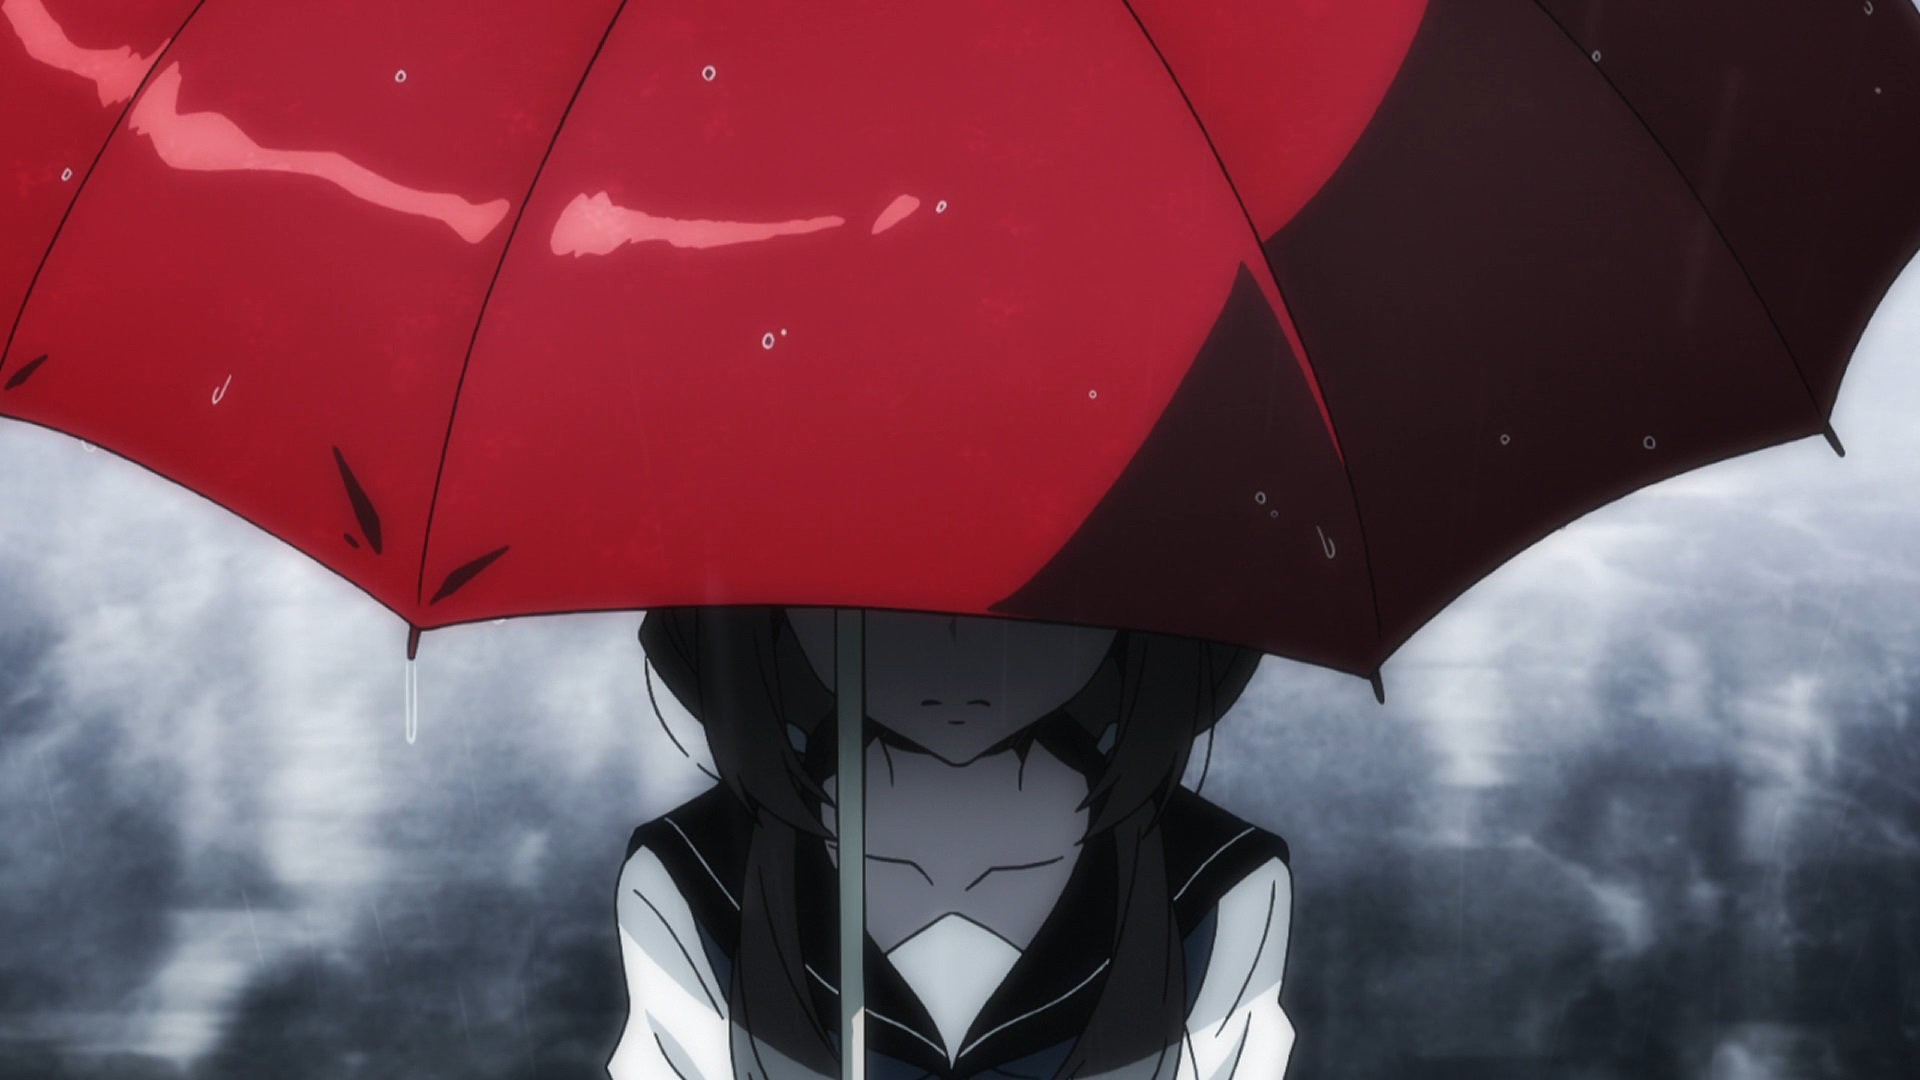 Anime 1920x1080 Kiznaiver umbrella anime girls red rain anime women with umbrella selective coloring